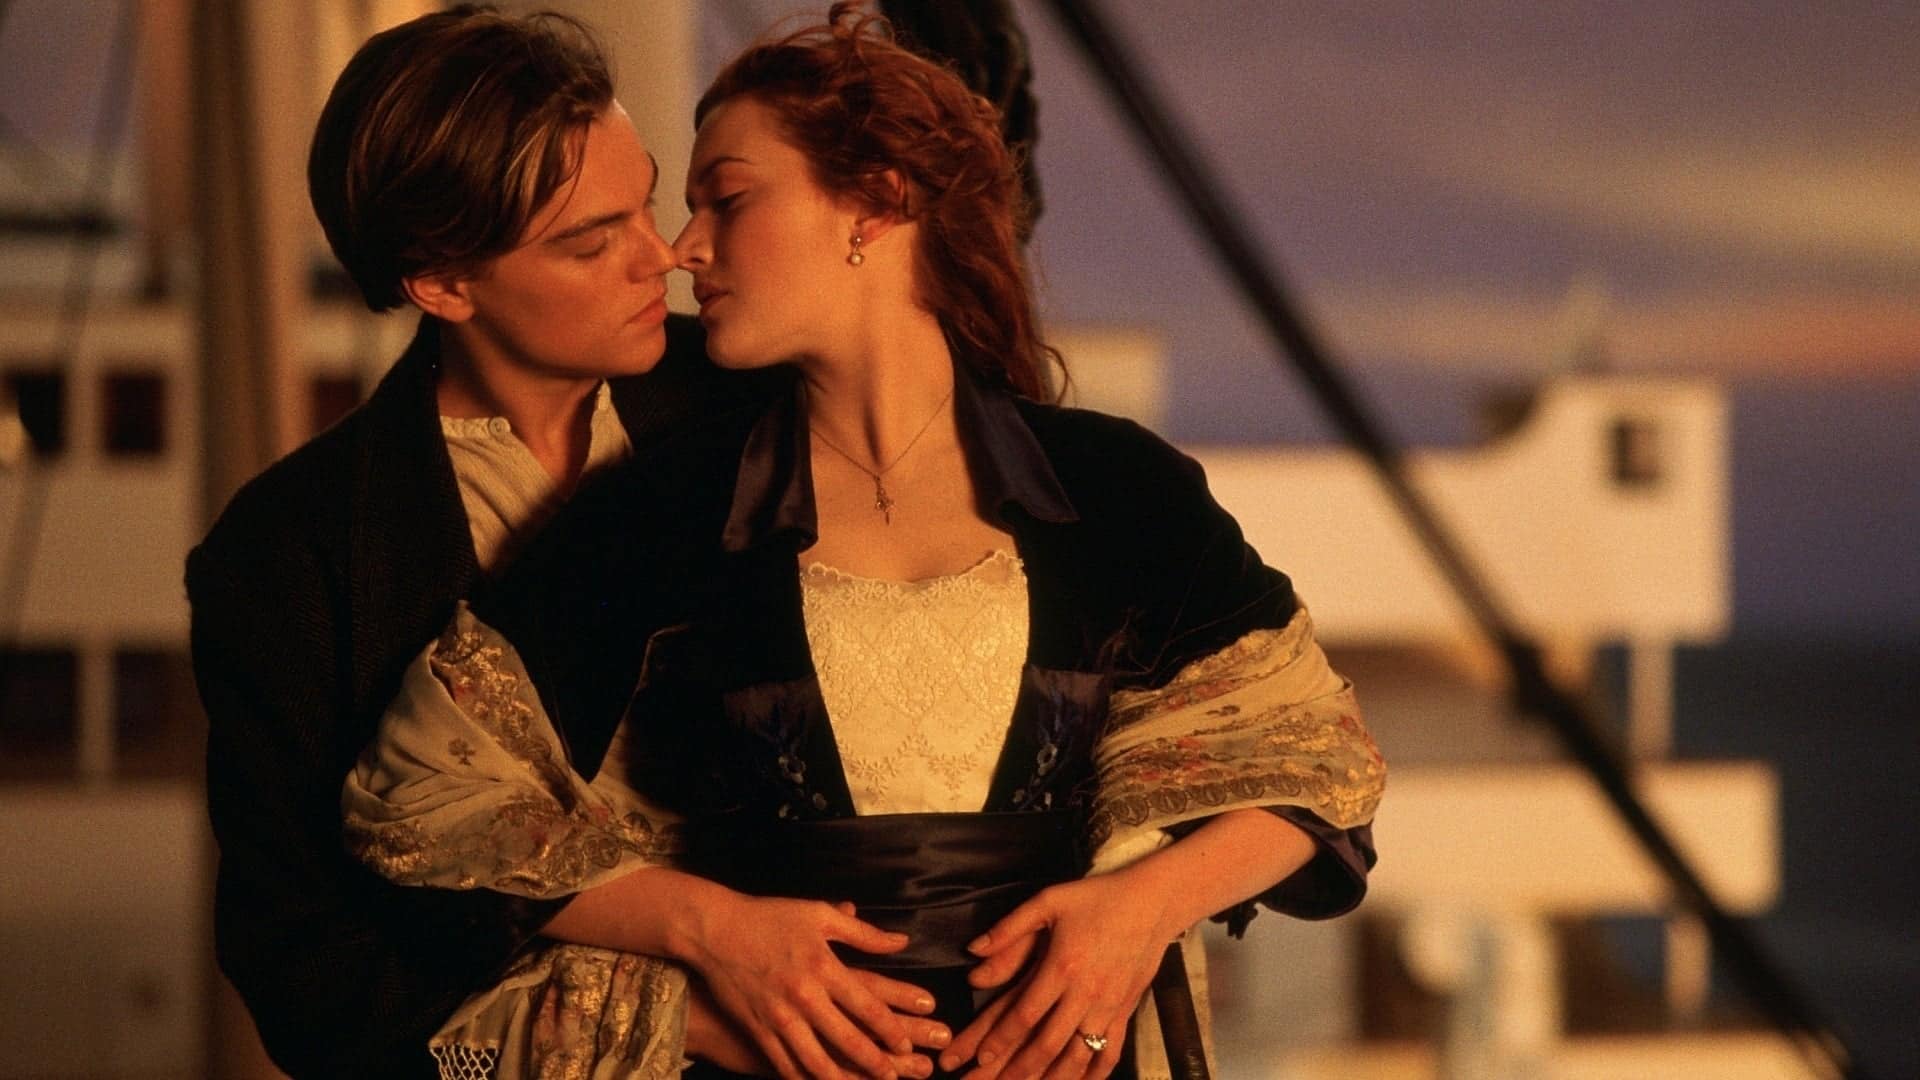 Titanic 1997 watch online OTT Streaming of movie on Disney+ Hotstar